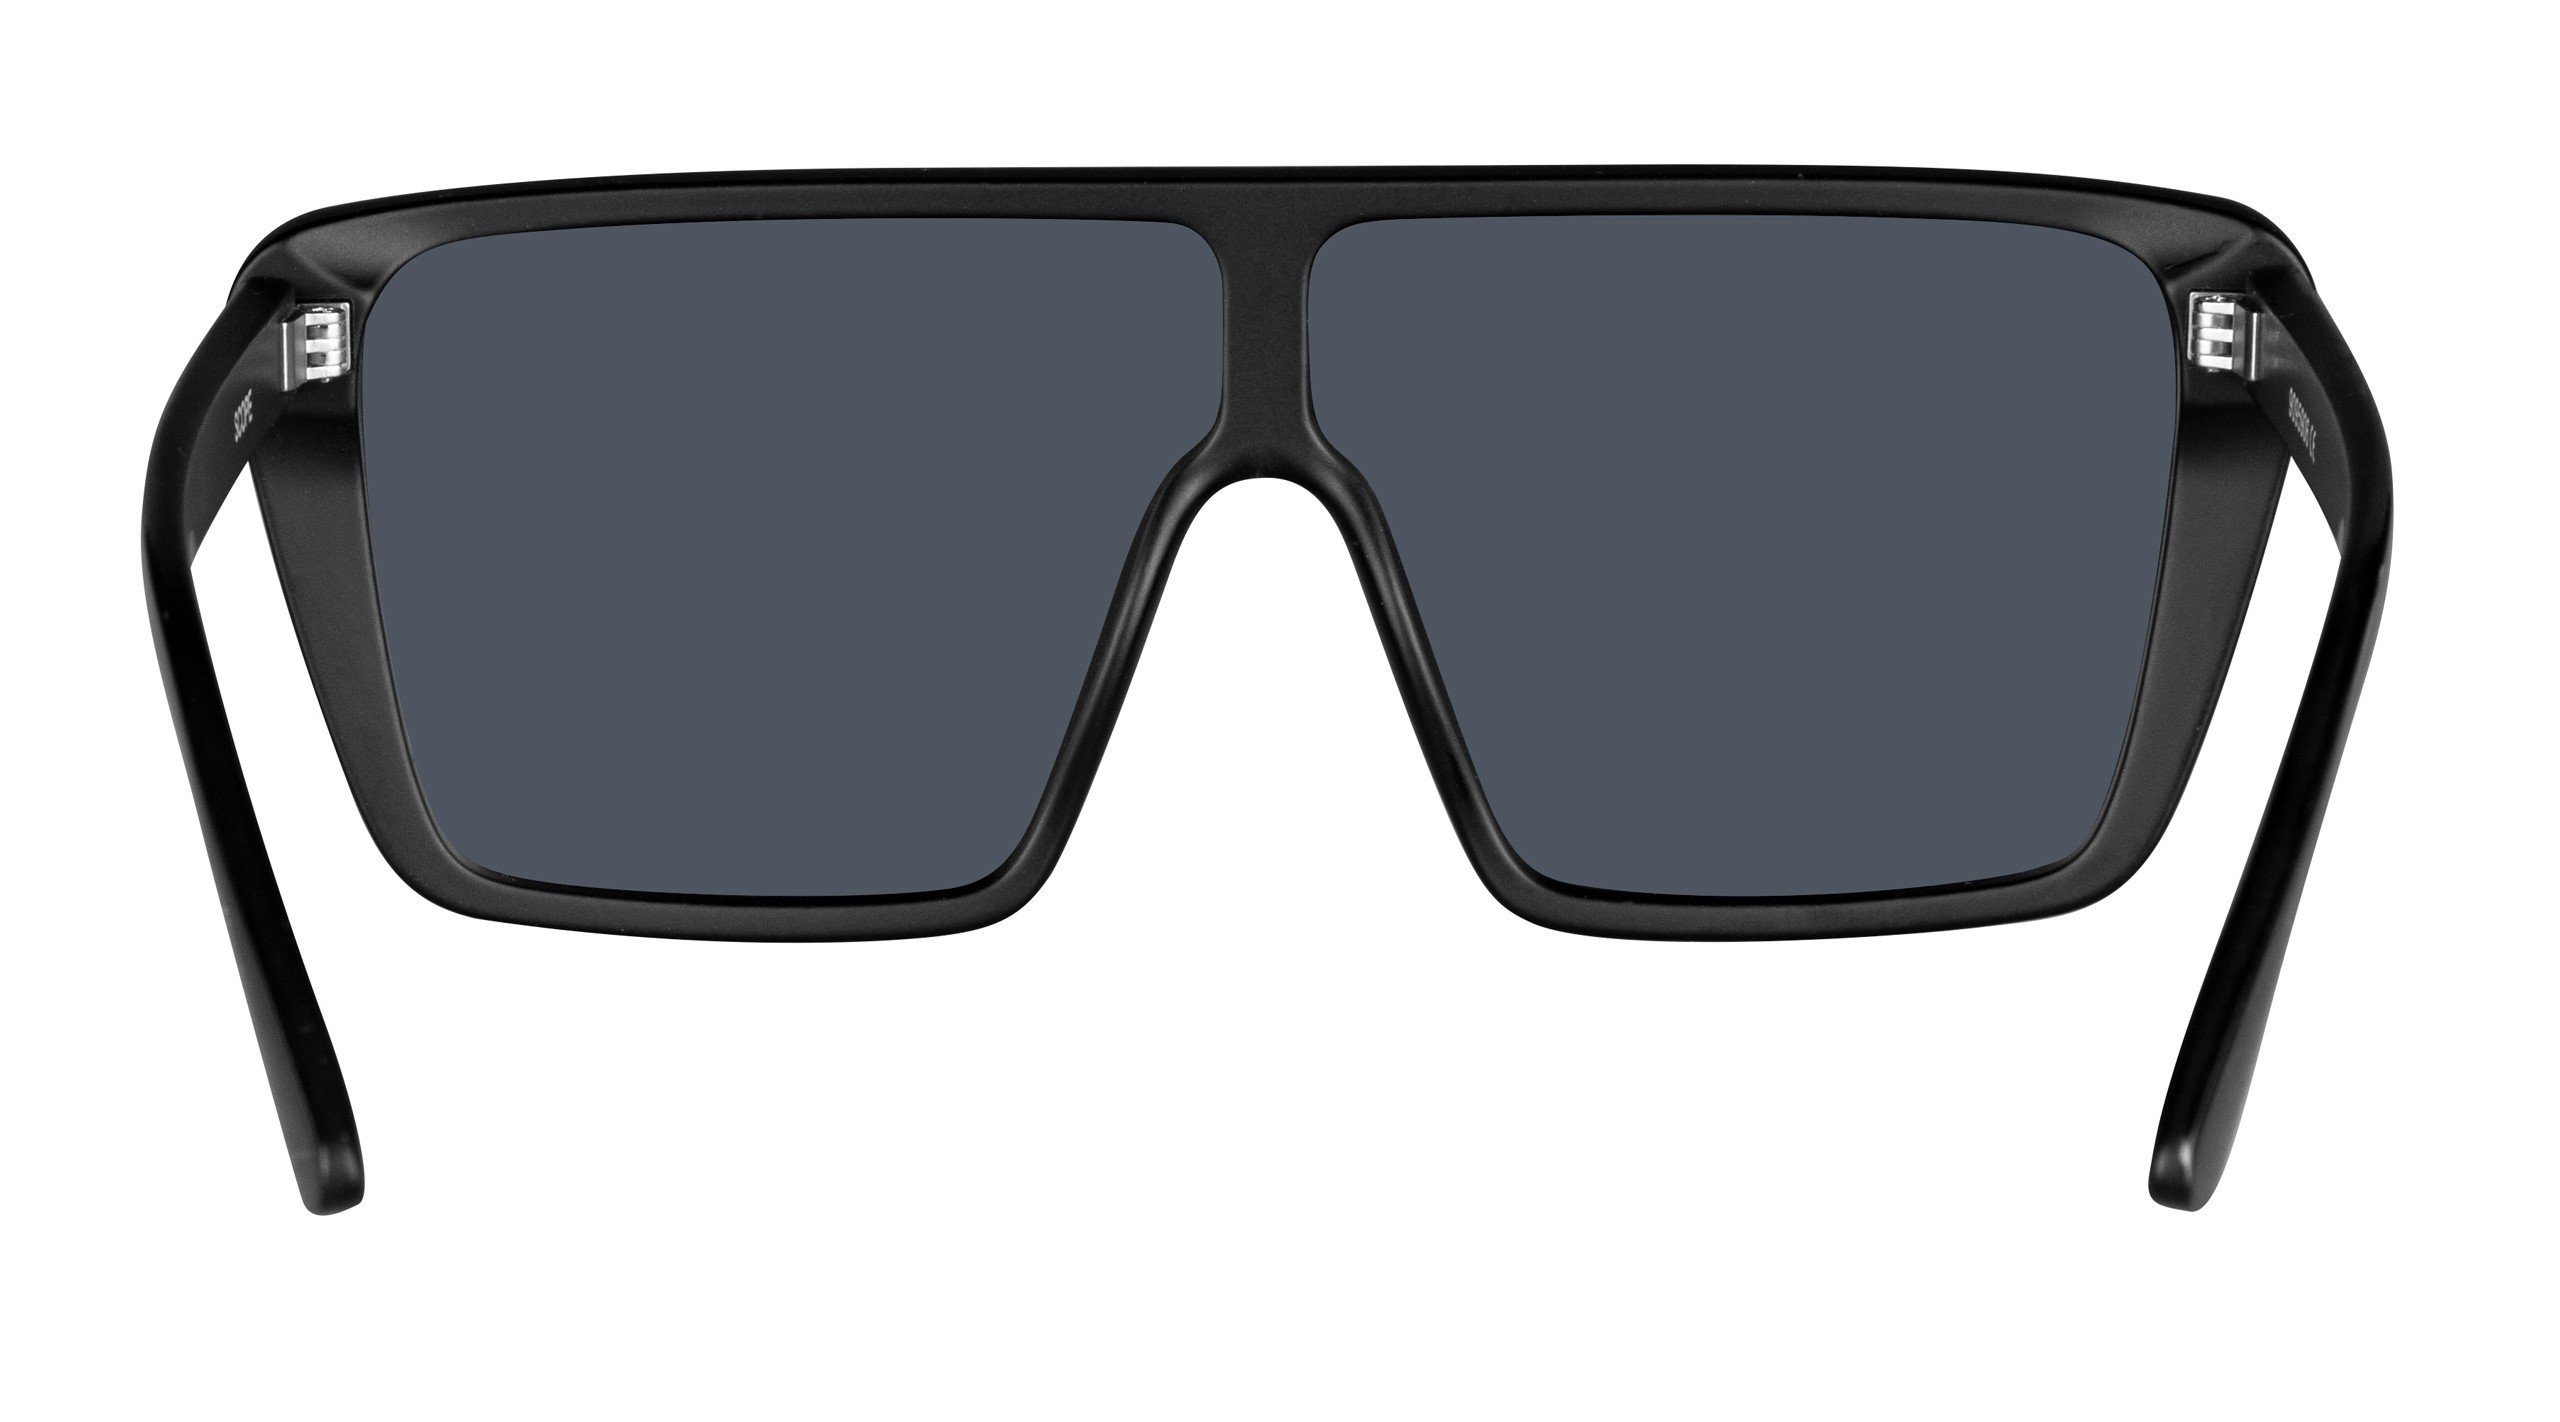 matt-schwarz FORCE Fahrradbrille FORCE Sonnenbrille SCOPE